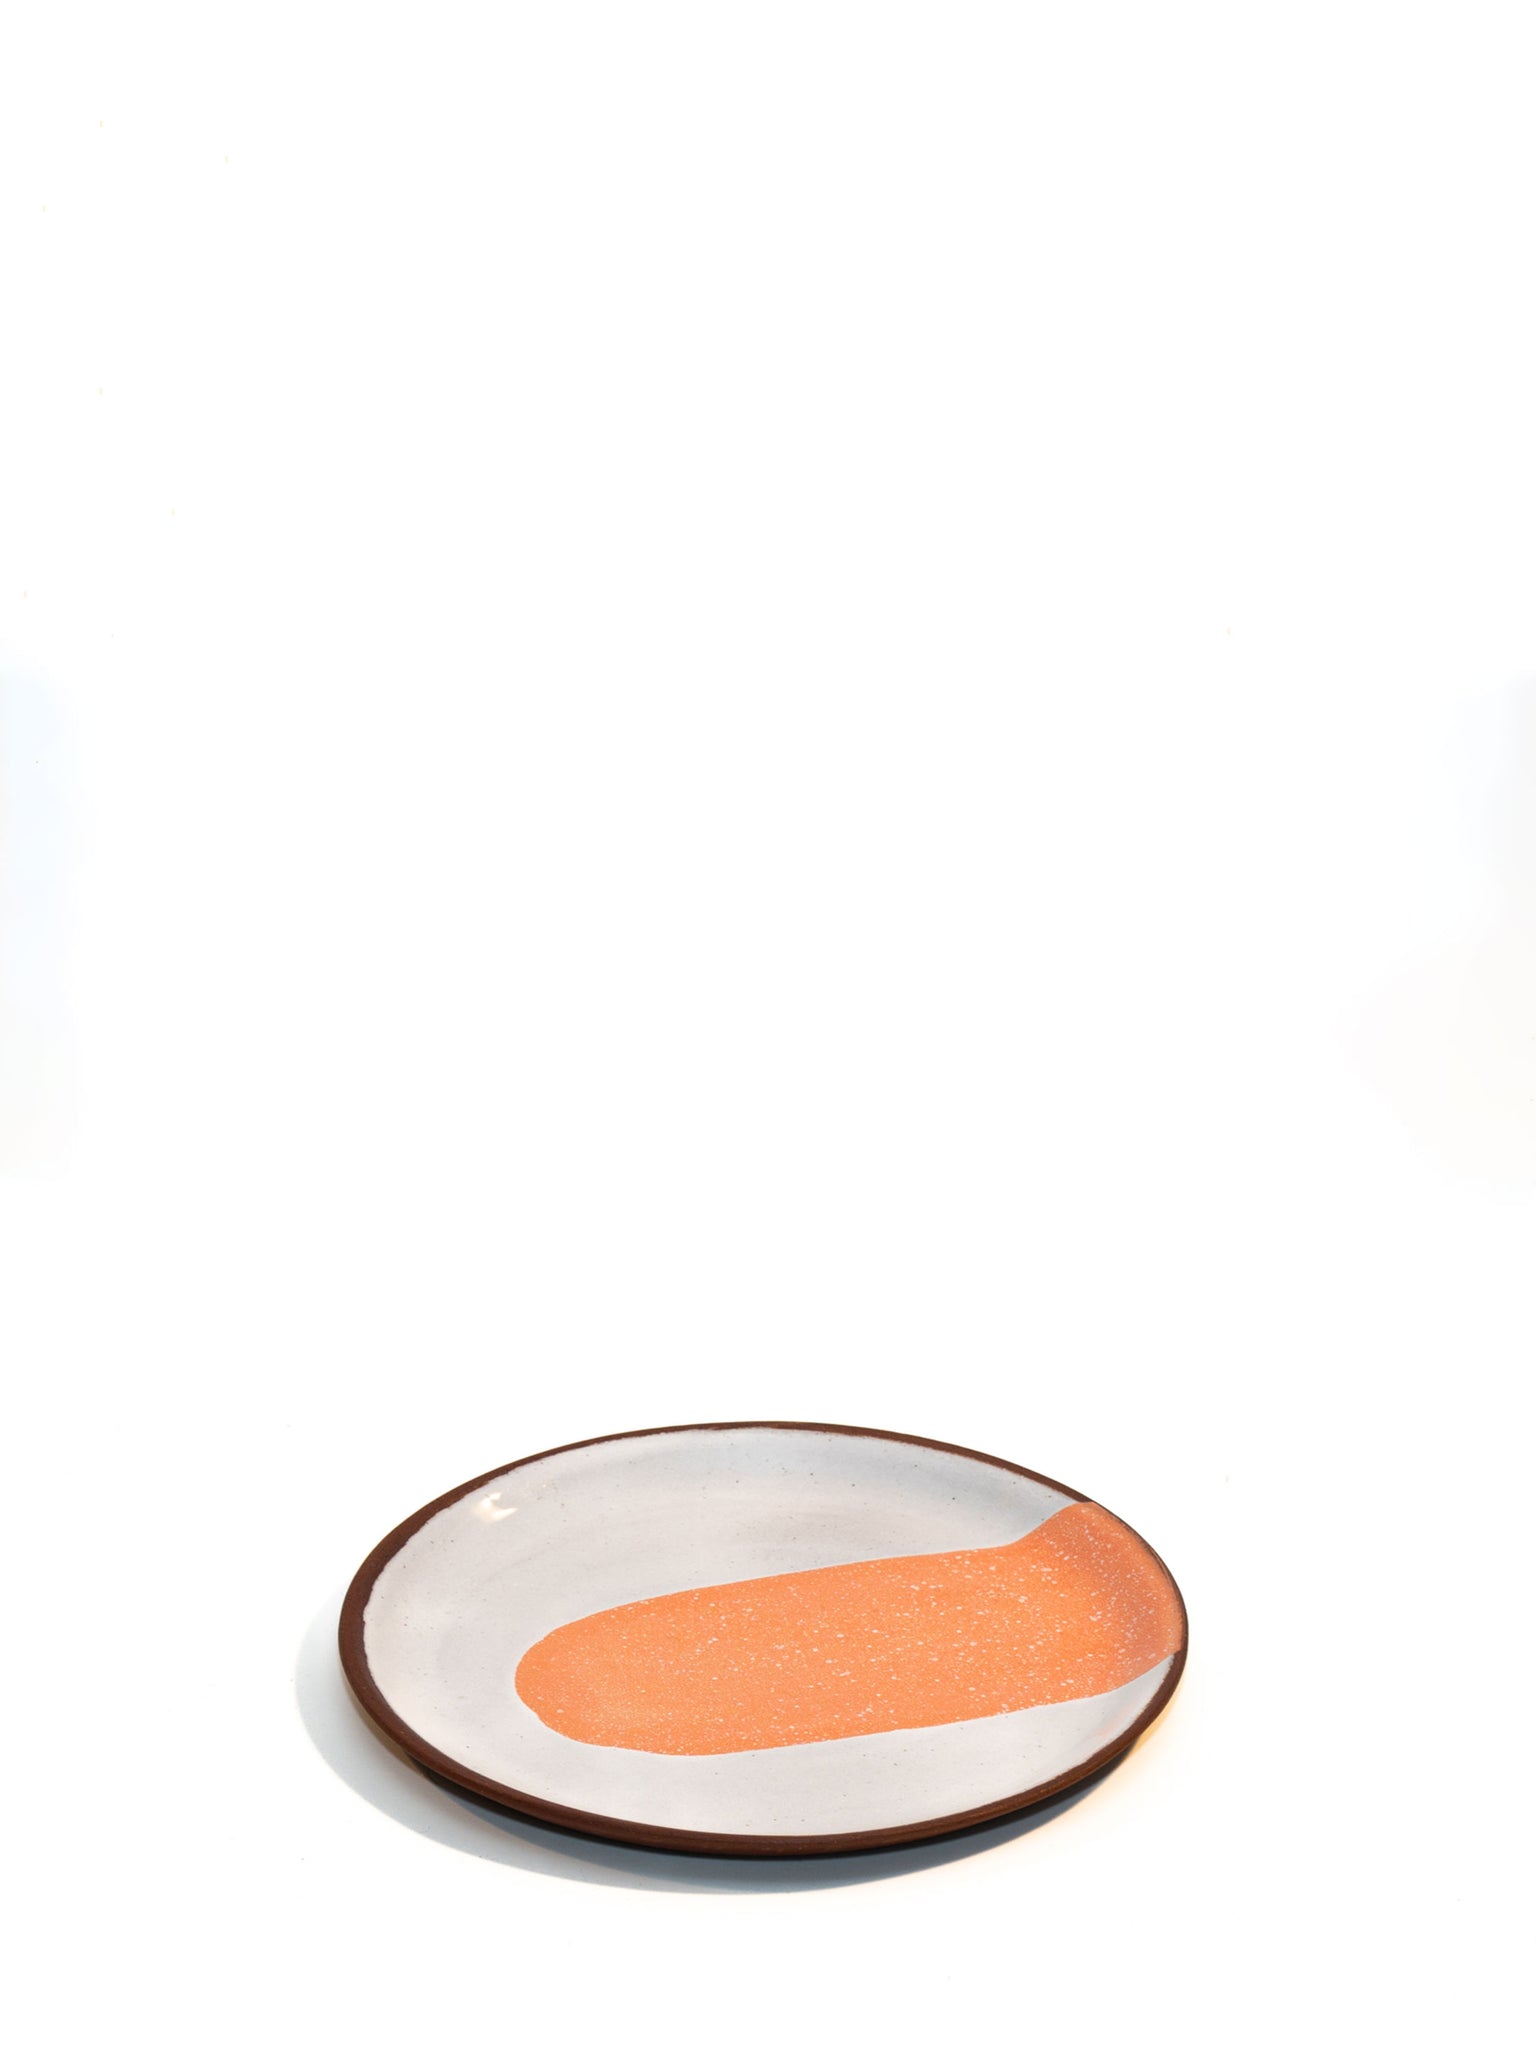 Silvia K handmade terracotta small plate with white and orange decor